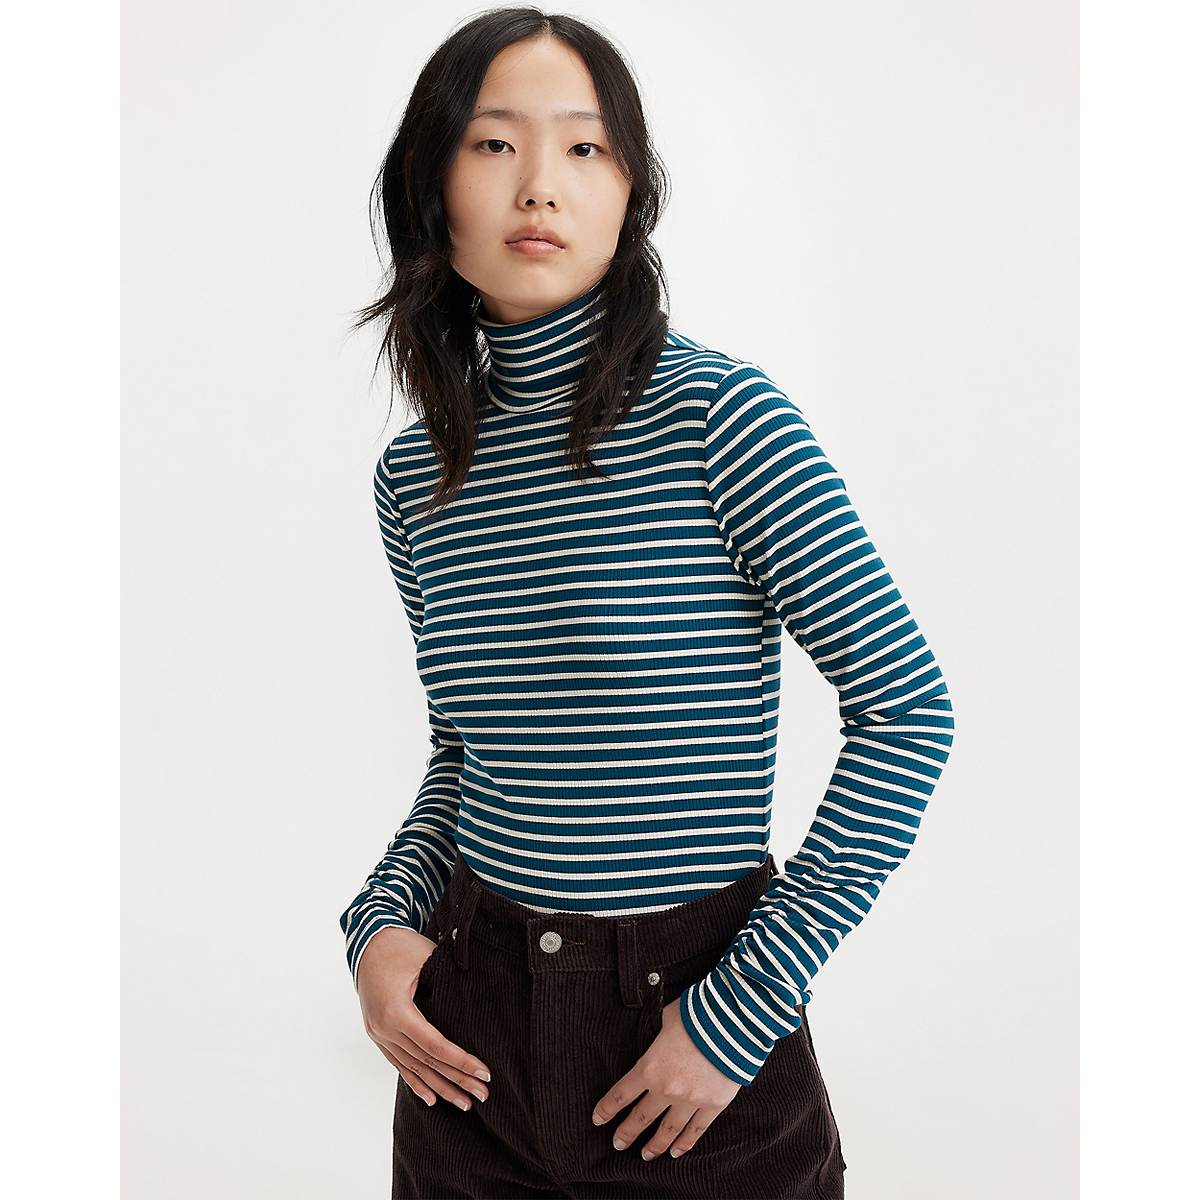 Woman wearing striped shirt